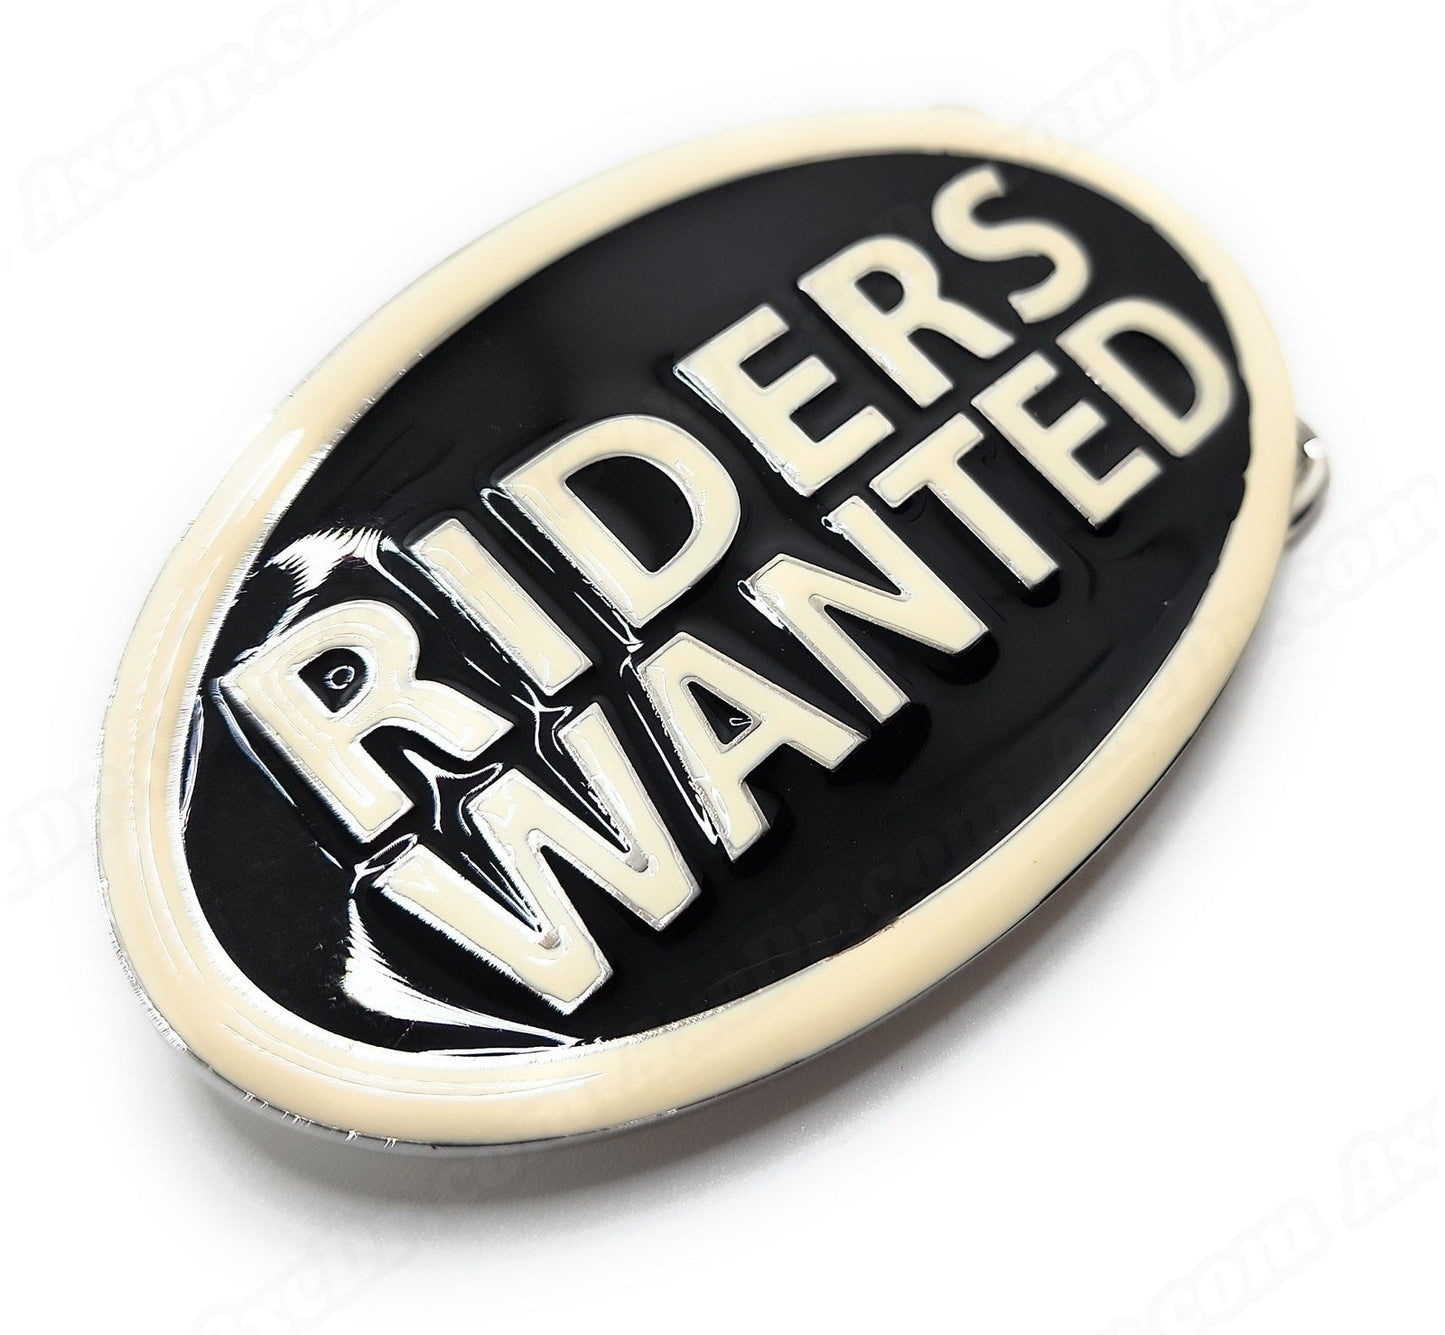 Riders Wanted Belt Buckle shop.AxeDr.com Belt Buckle, black, Funny, Funny Belt Buckle, Novelty